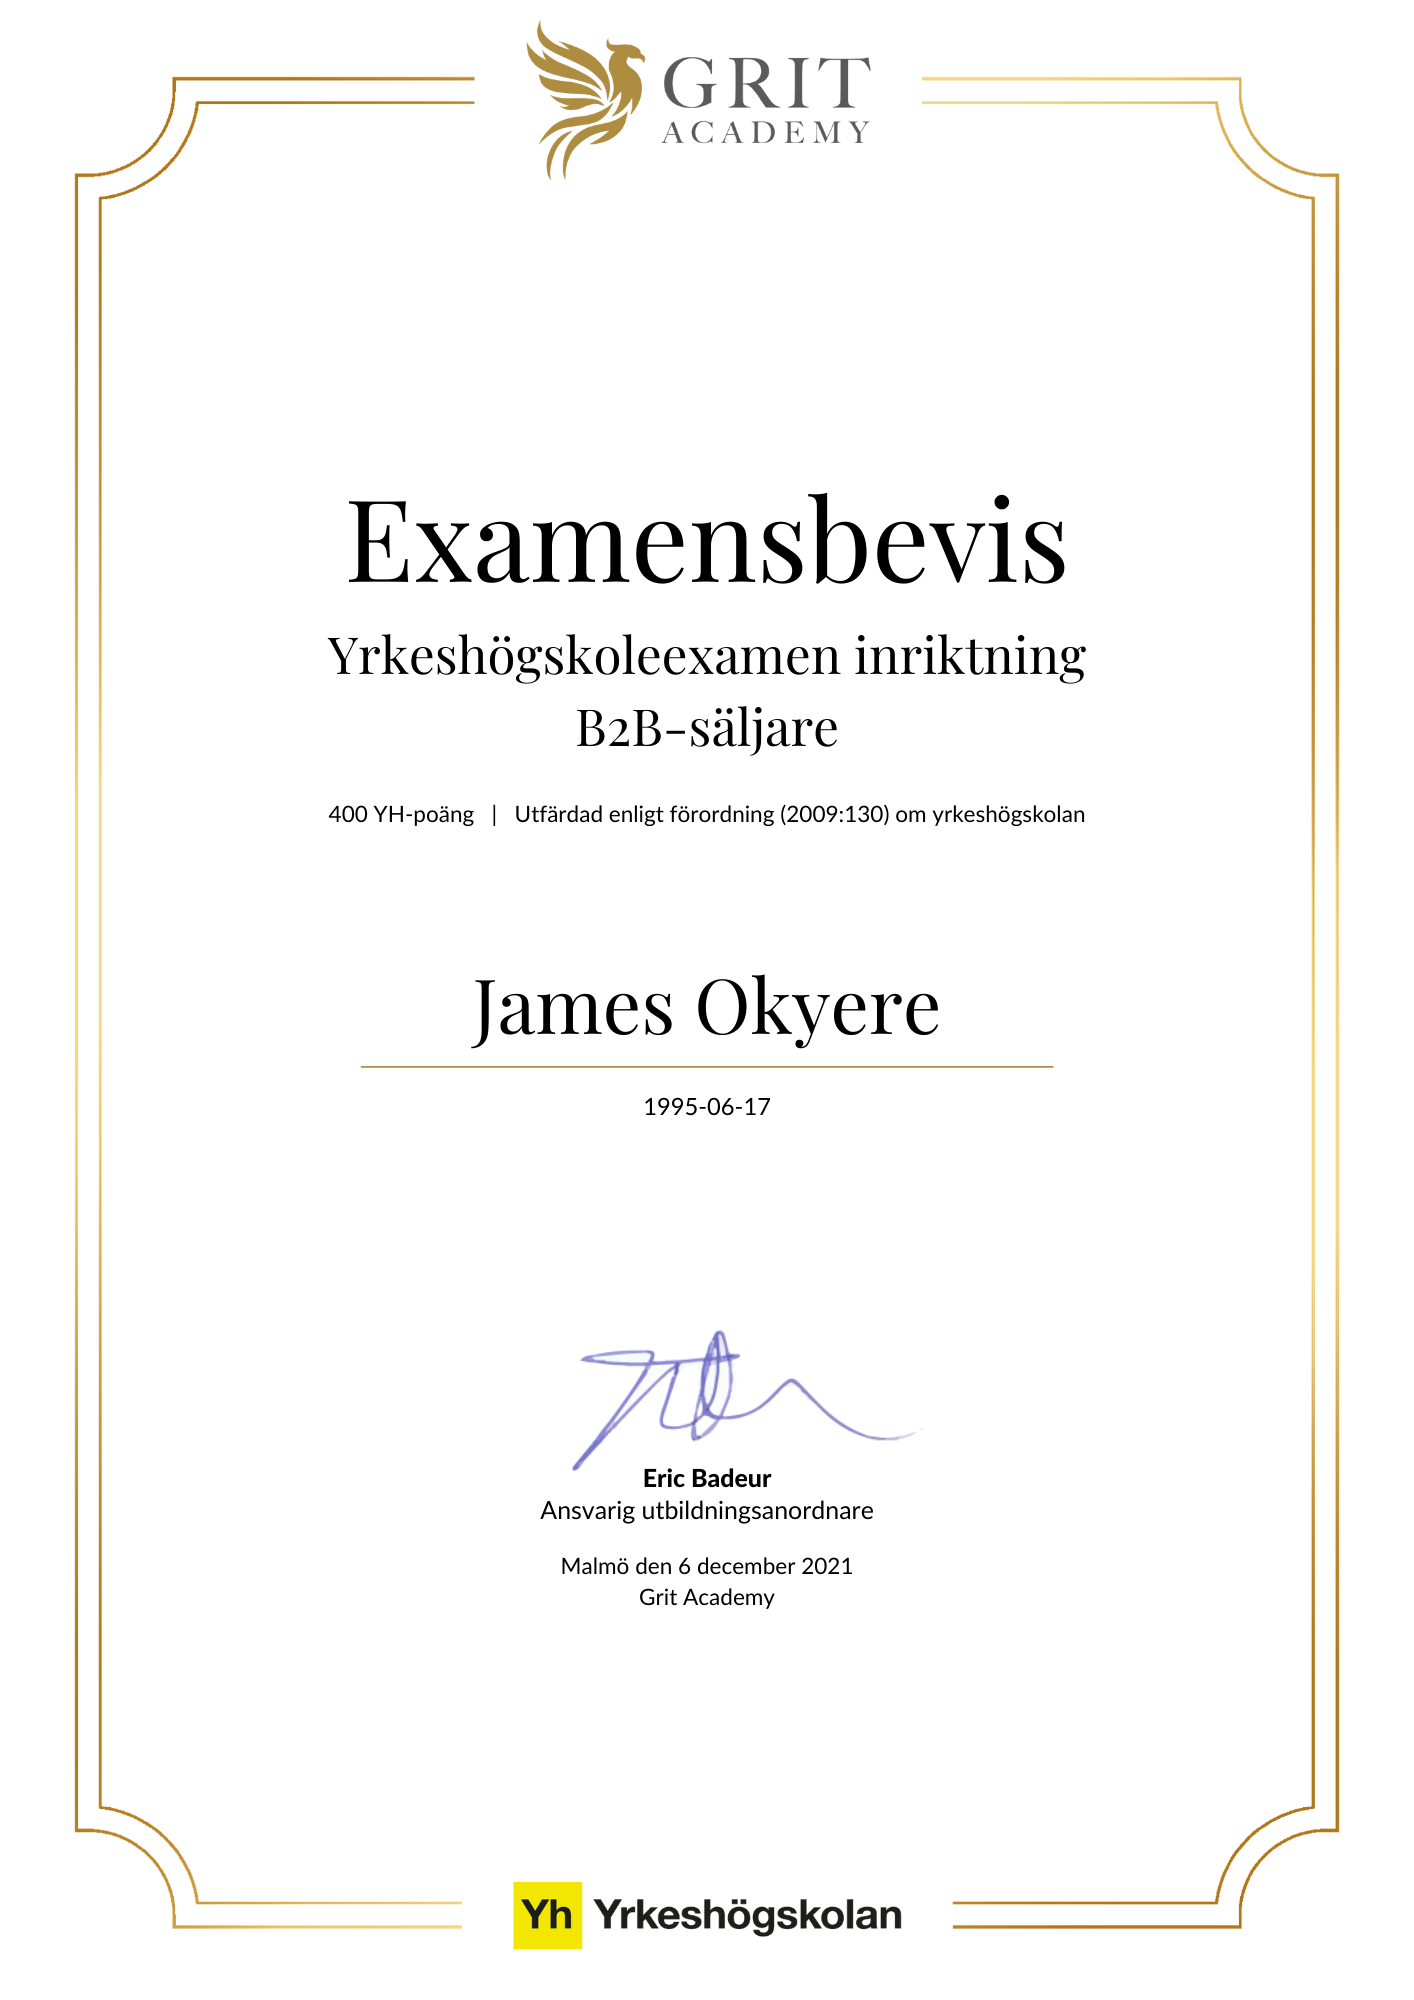 Examensbevis James Okyere - 1